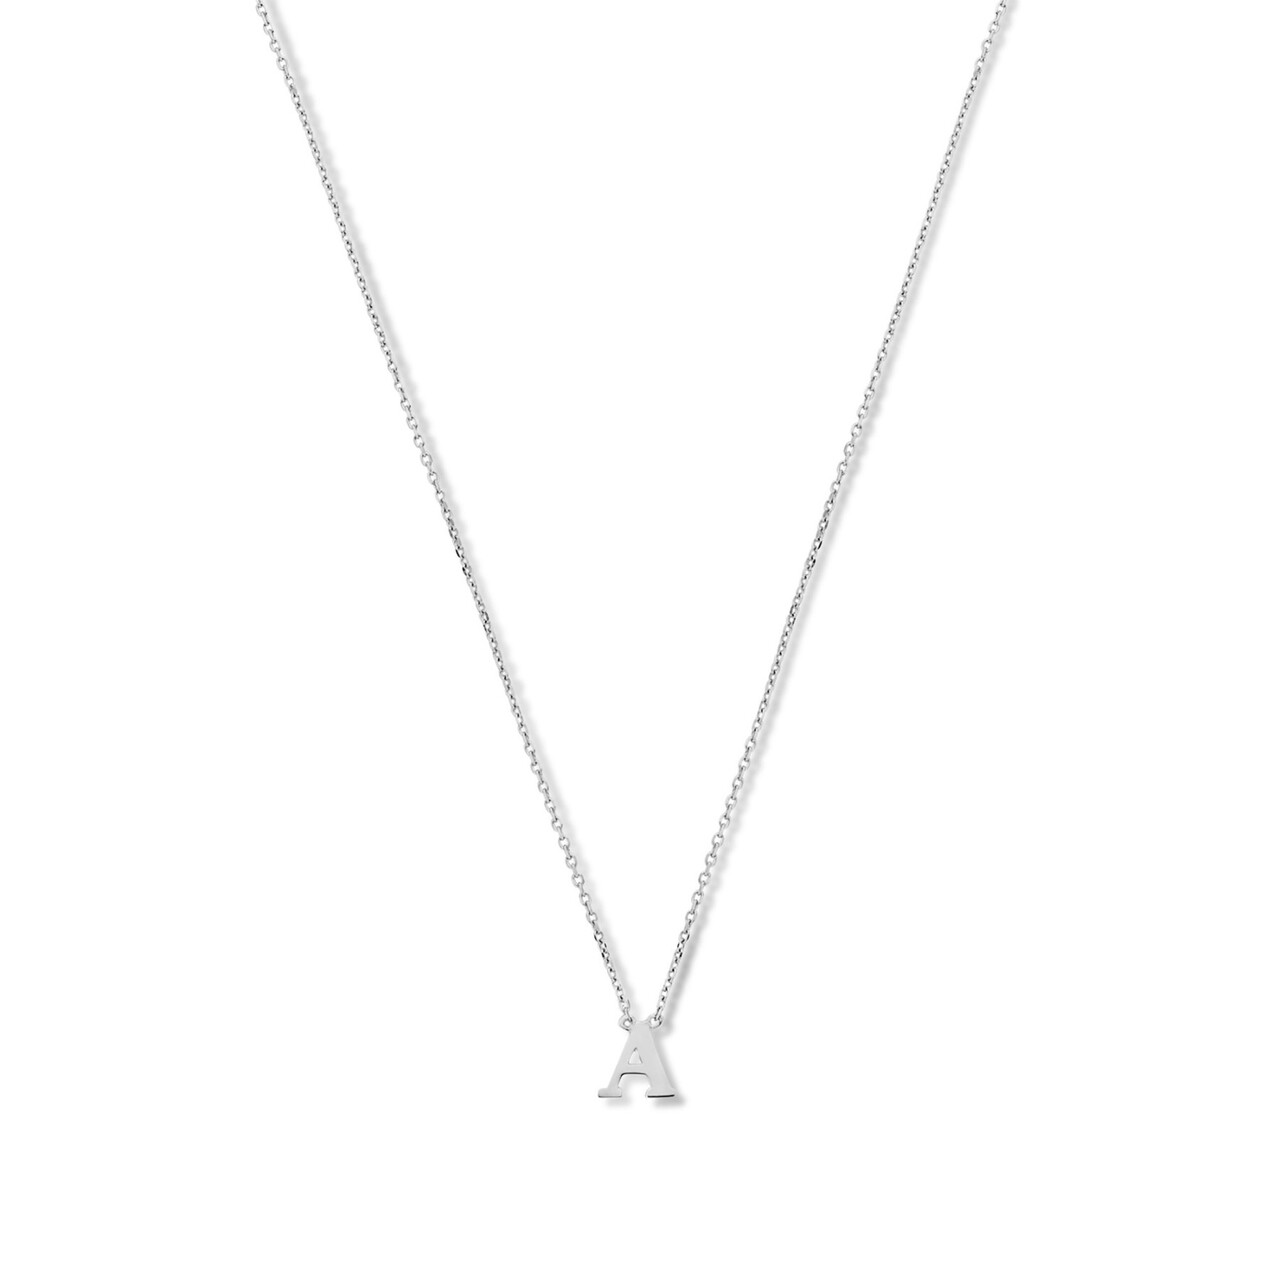 14k Yellow Gold & White Diamond Initial Necklace – Dandelion Jewelry